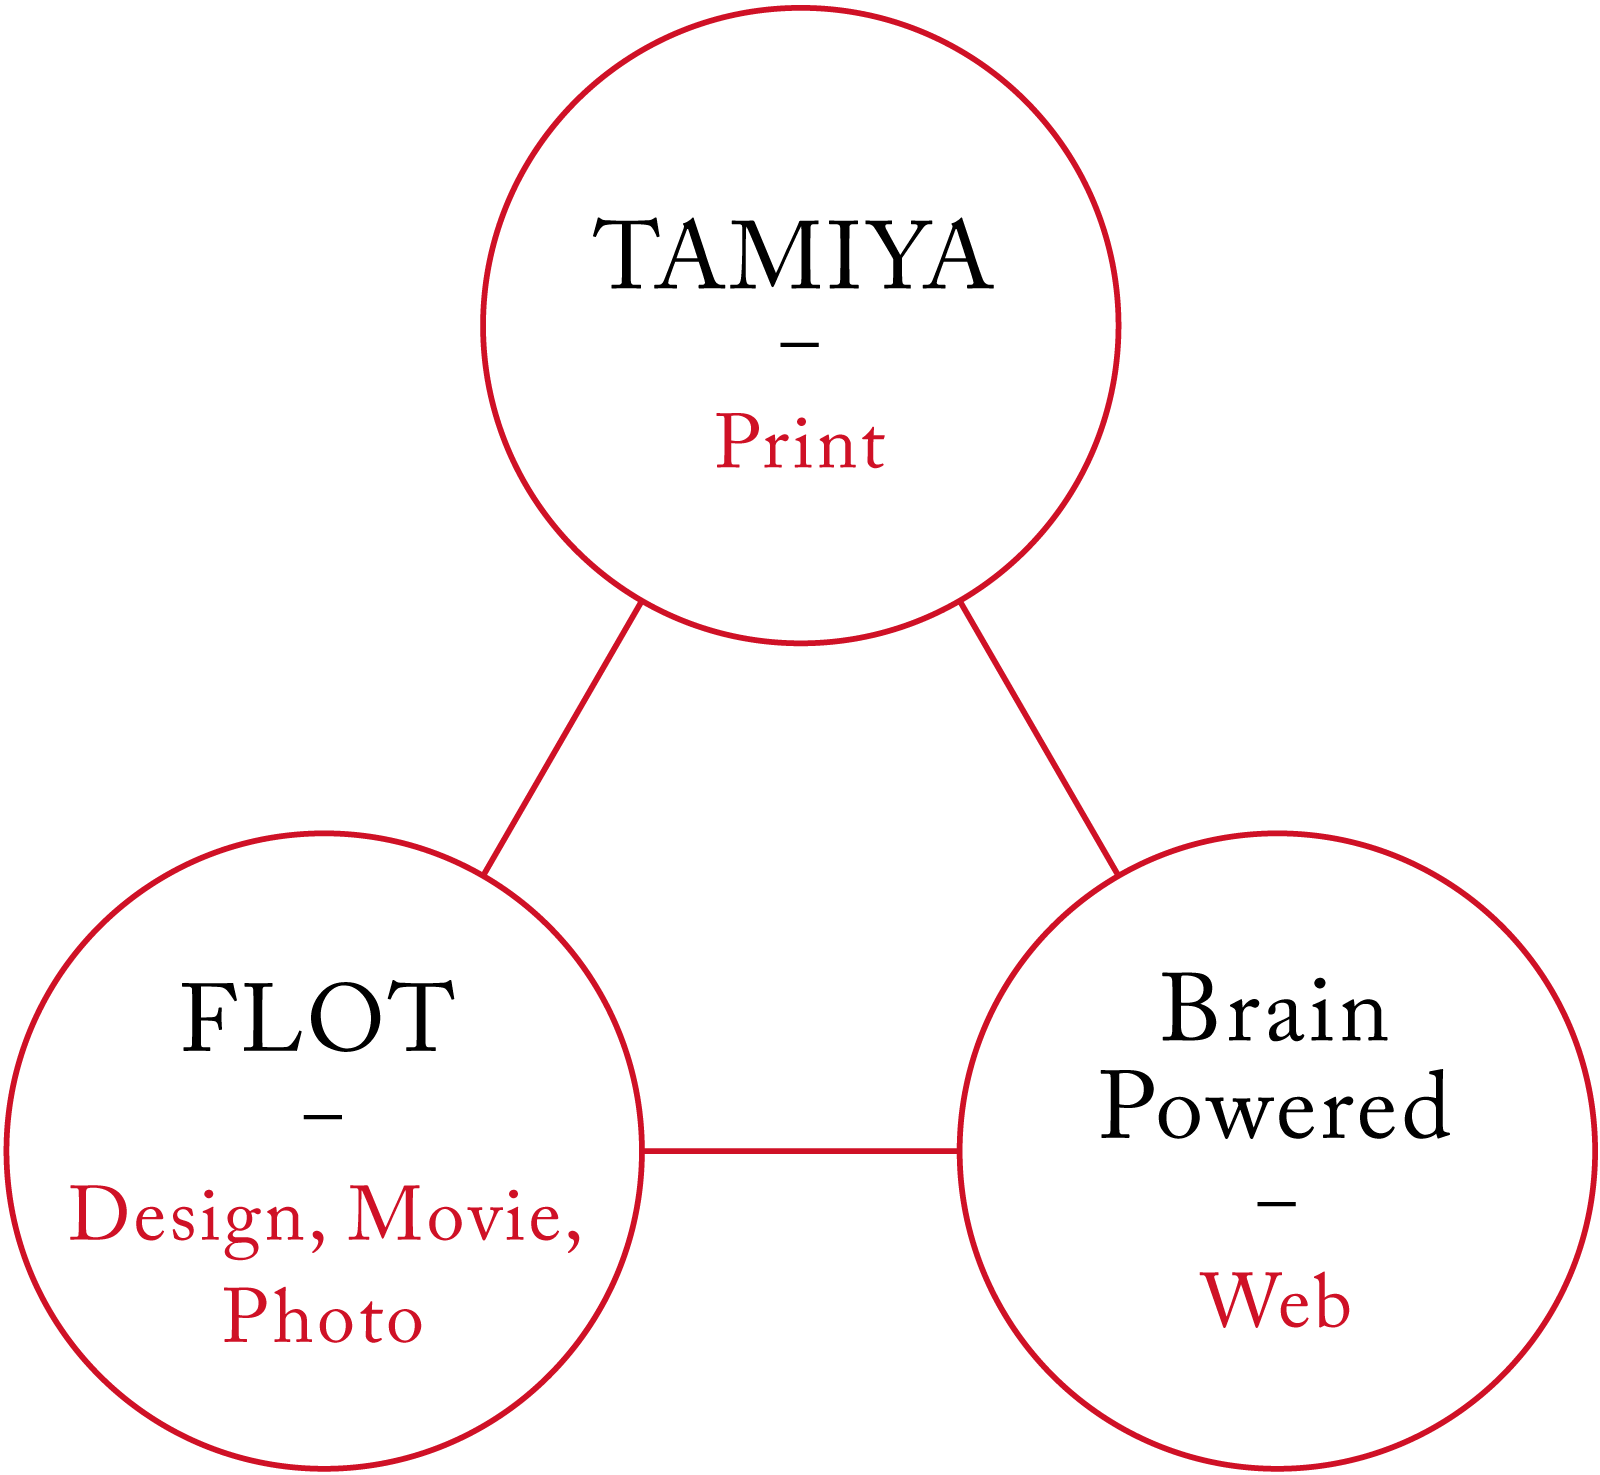 TAMIYA-Print,FLOT-Design.Movie.Photo,BrainPowered-Web